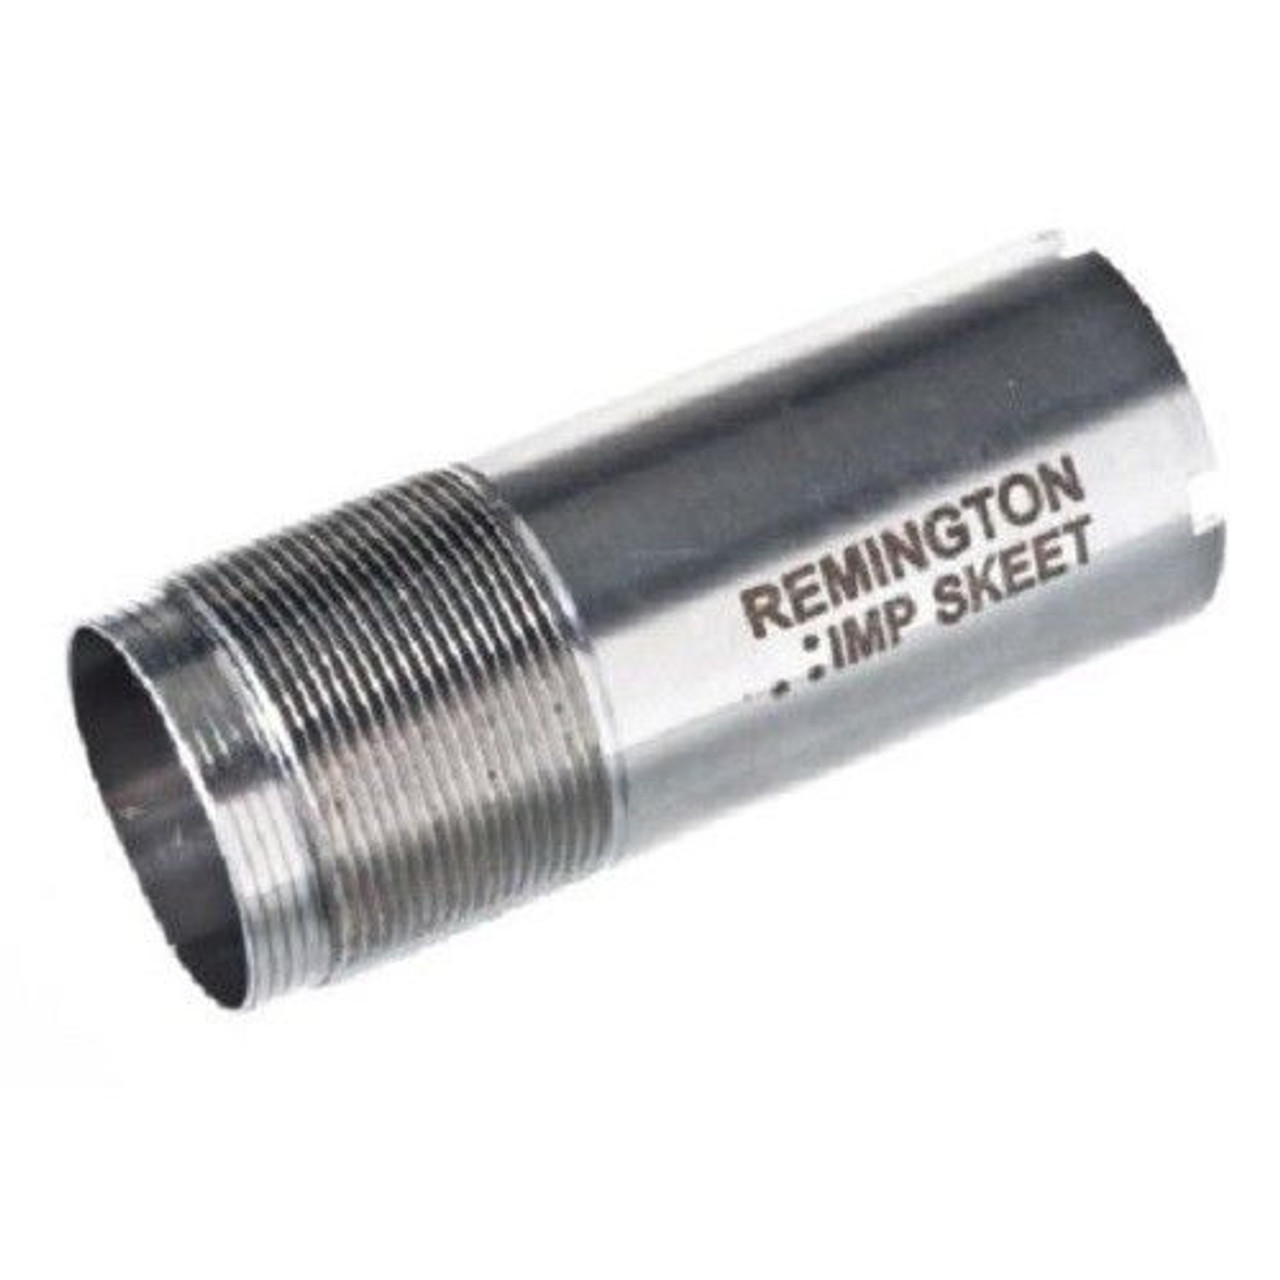 Remington Choke Tube 12 Gauge Flush Improved Skeet II Steel or Lead, 19608